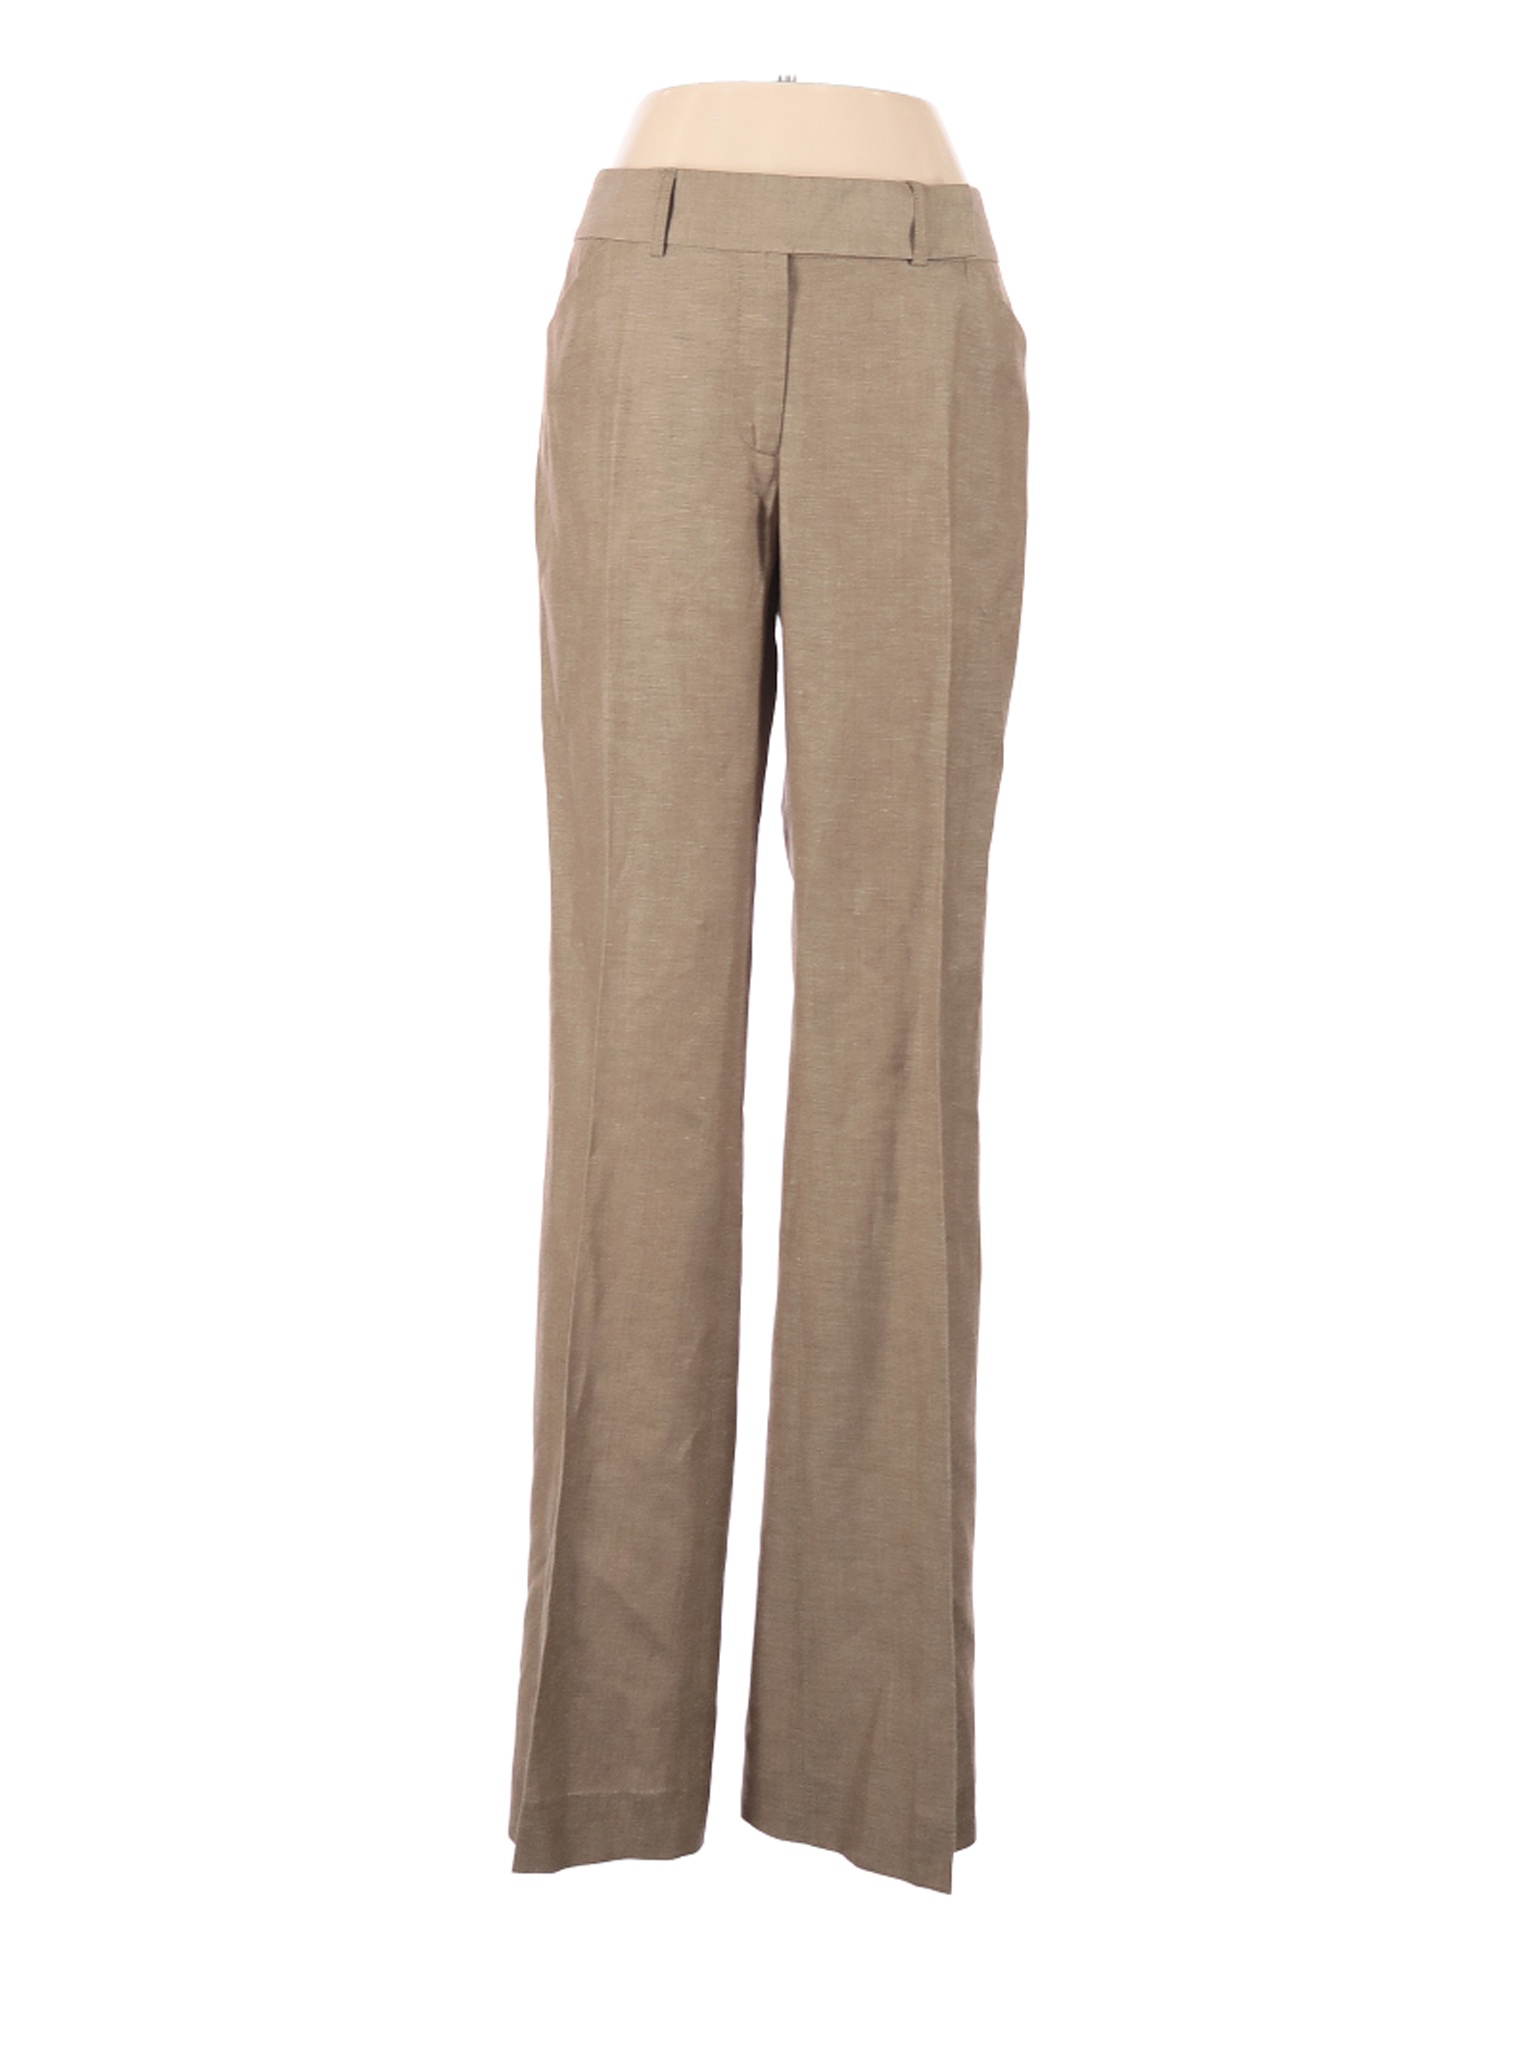 Antonio Melani Women Brown Linen Pants 8 | eBay